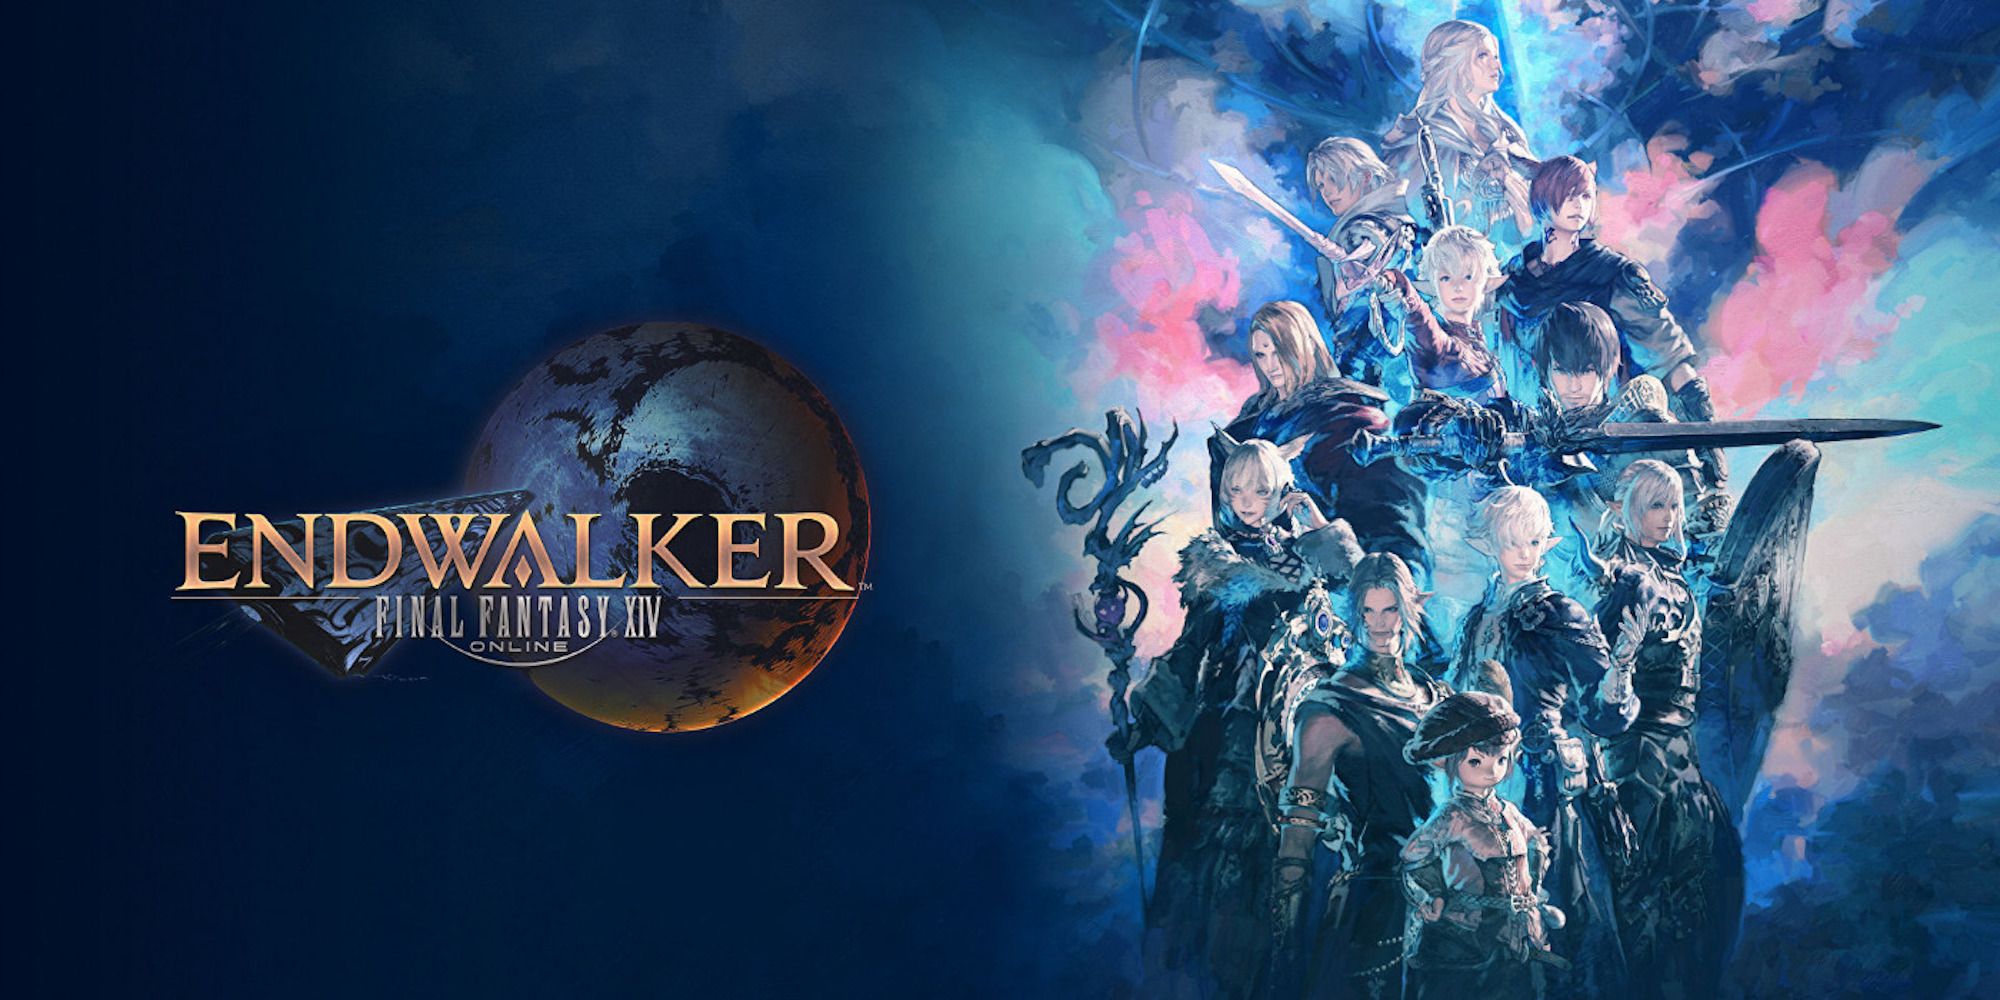 Promo art featuring characters from Final Fantasy XIV: Endwalker